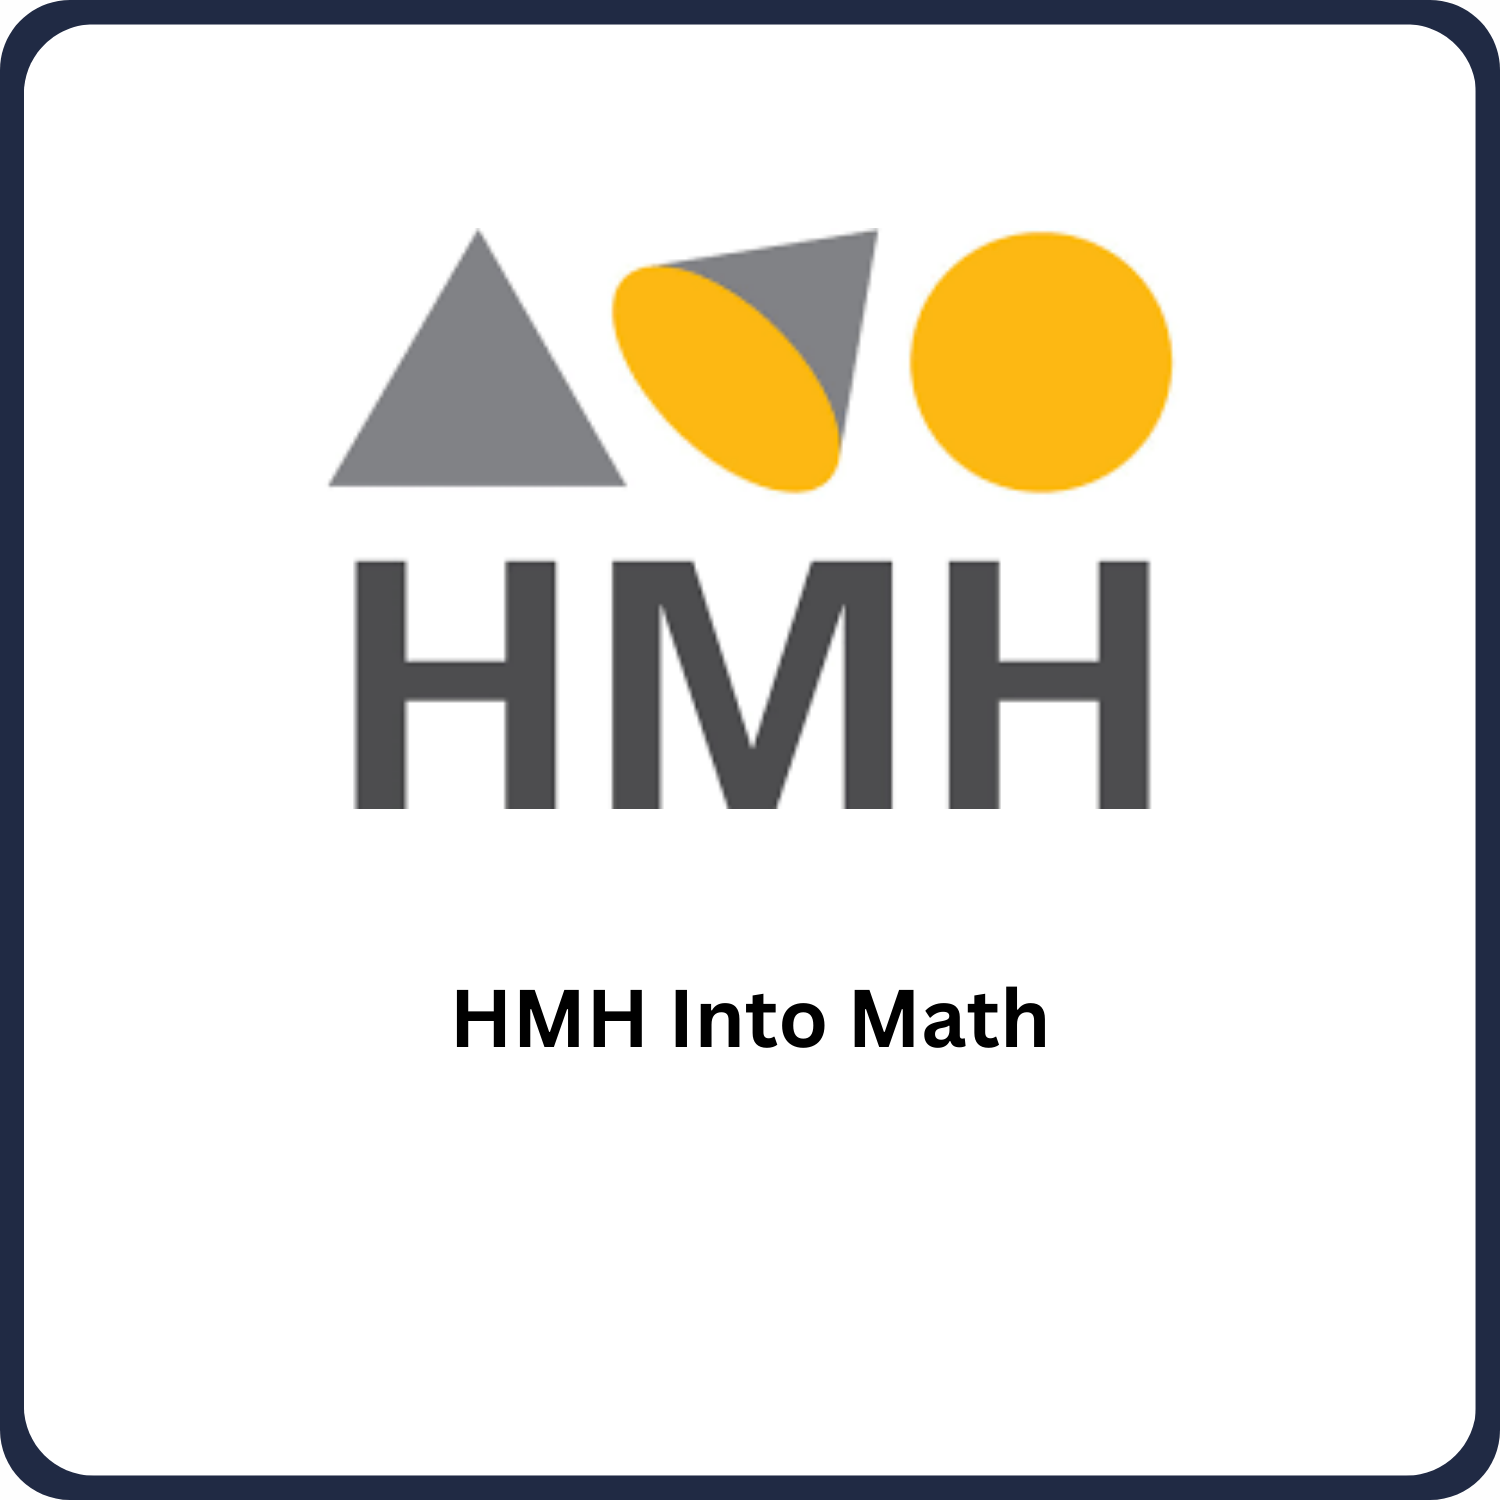 HMH Into Math